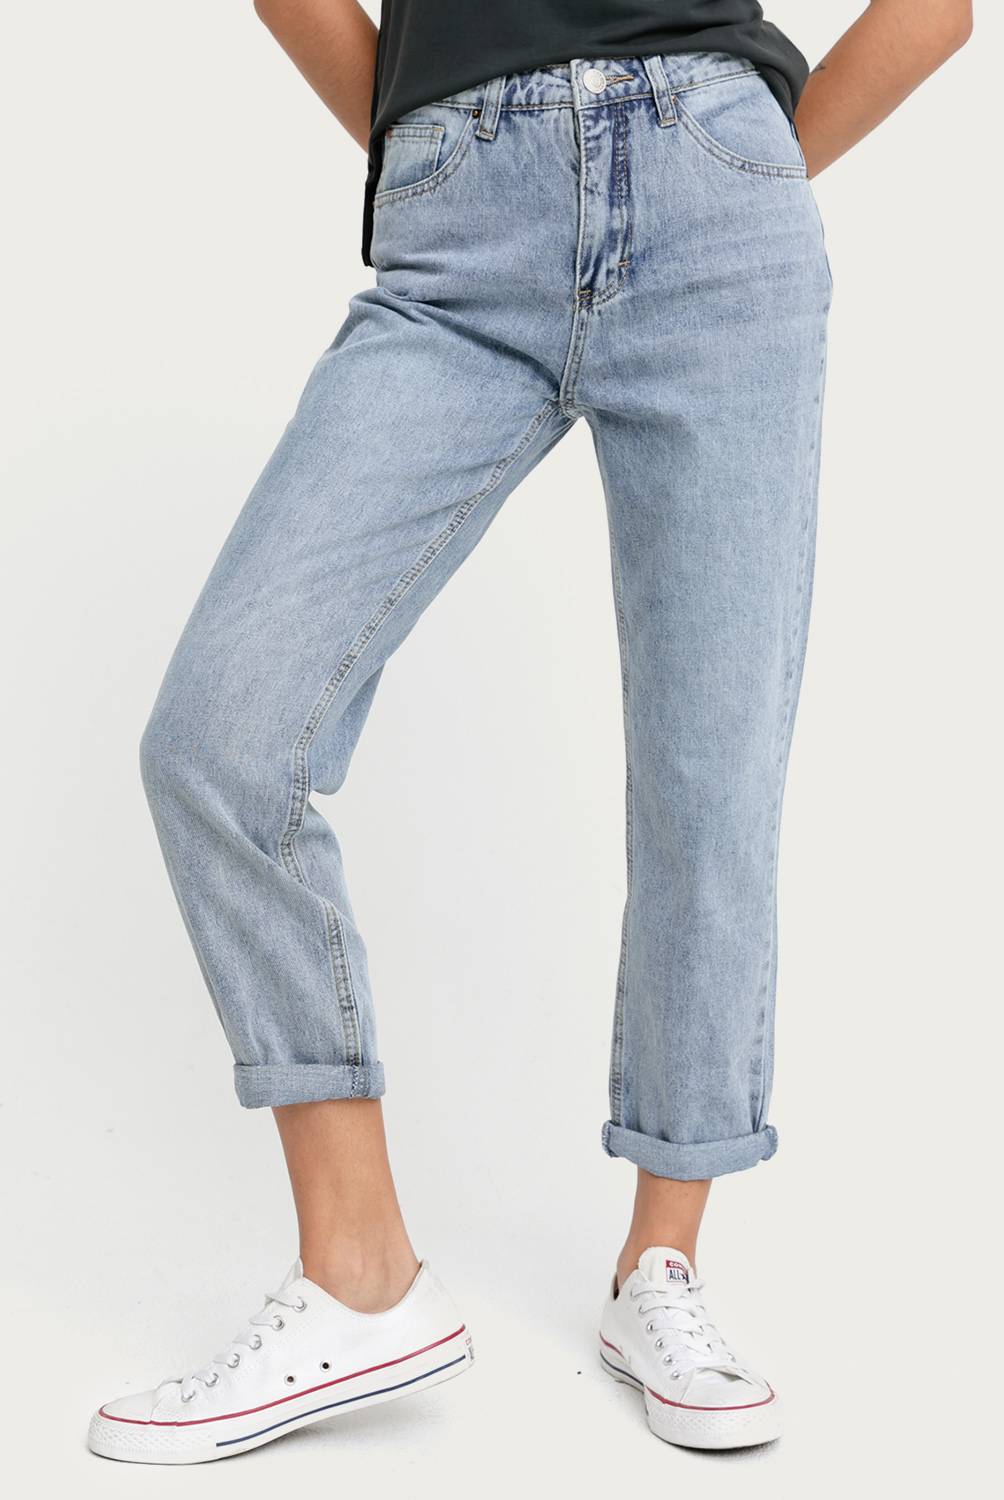 AMERICANINO - Jeans Mom Tiro Alto Mujer